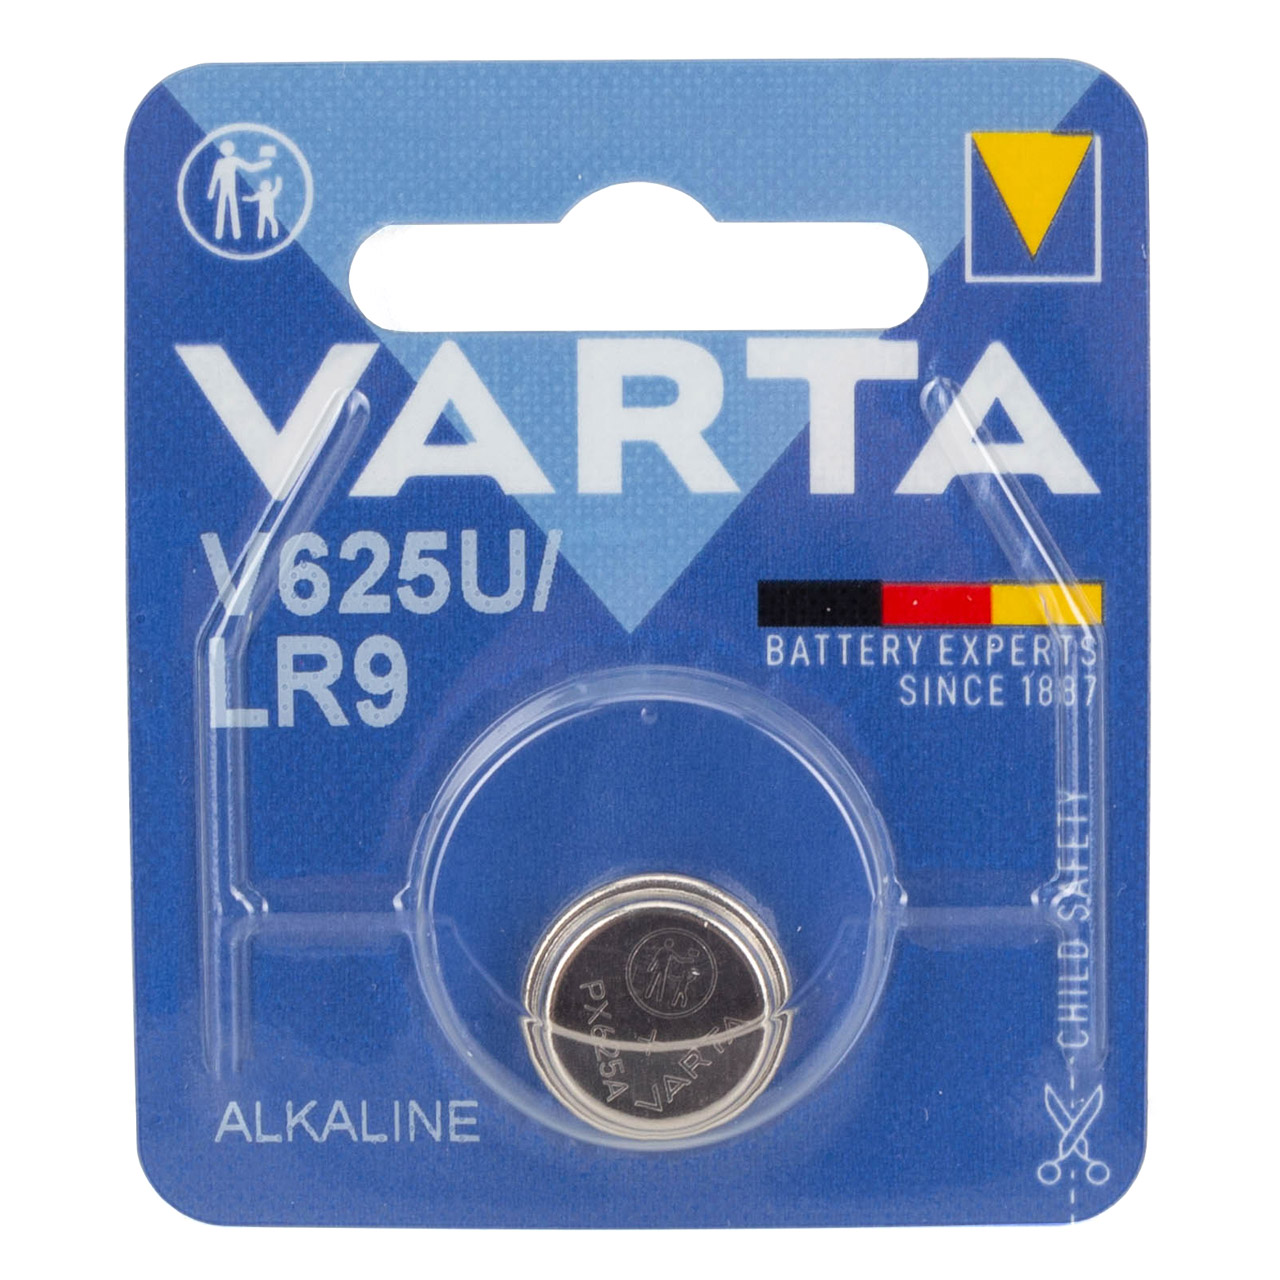 10x VARTA Alkaline V625U LR9 PX625A Knopfzelle Knopfbatterie Batterie 1.5V (MHD 04.2026)